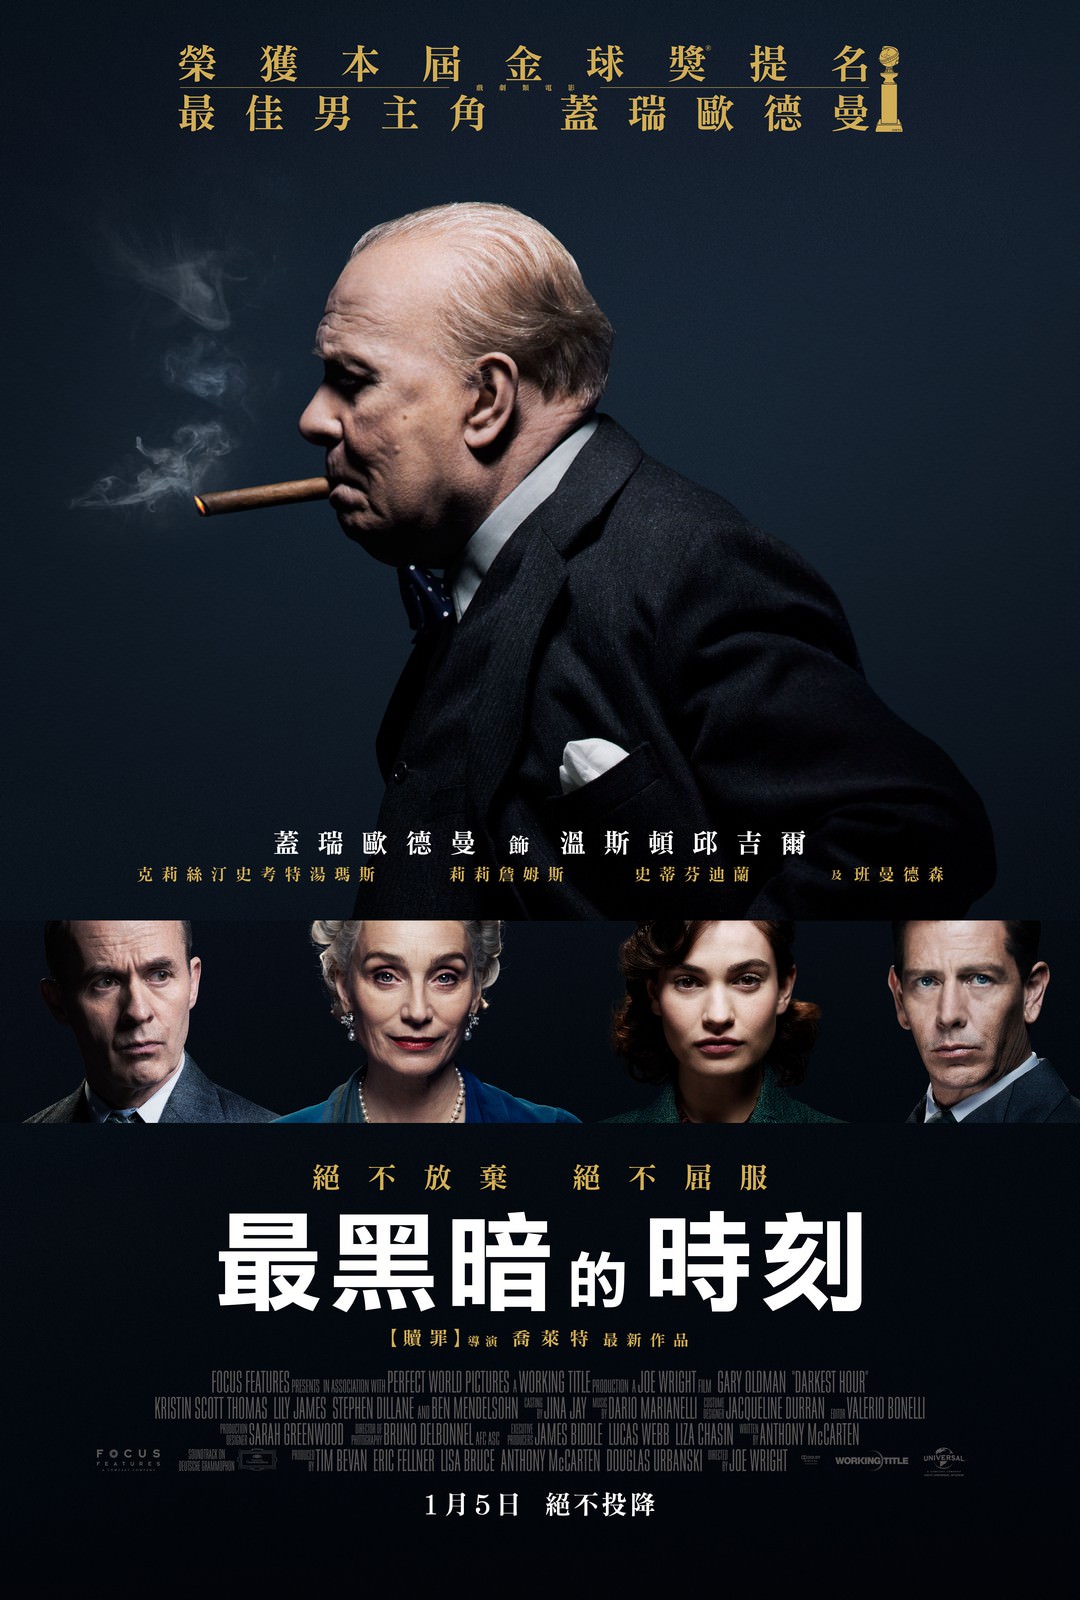 Movie, Darkest Hour(英國, 2017) / 最黑暗的時刻(台灣) / 至暗时刻(中國) / 黑暗對峙(香港), 電影海報, 台灣